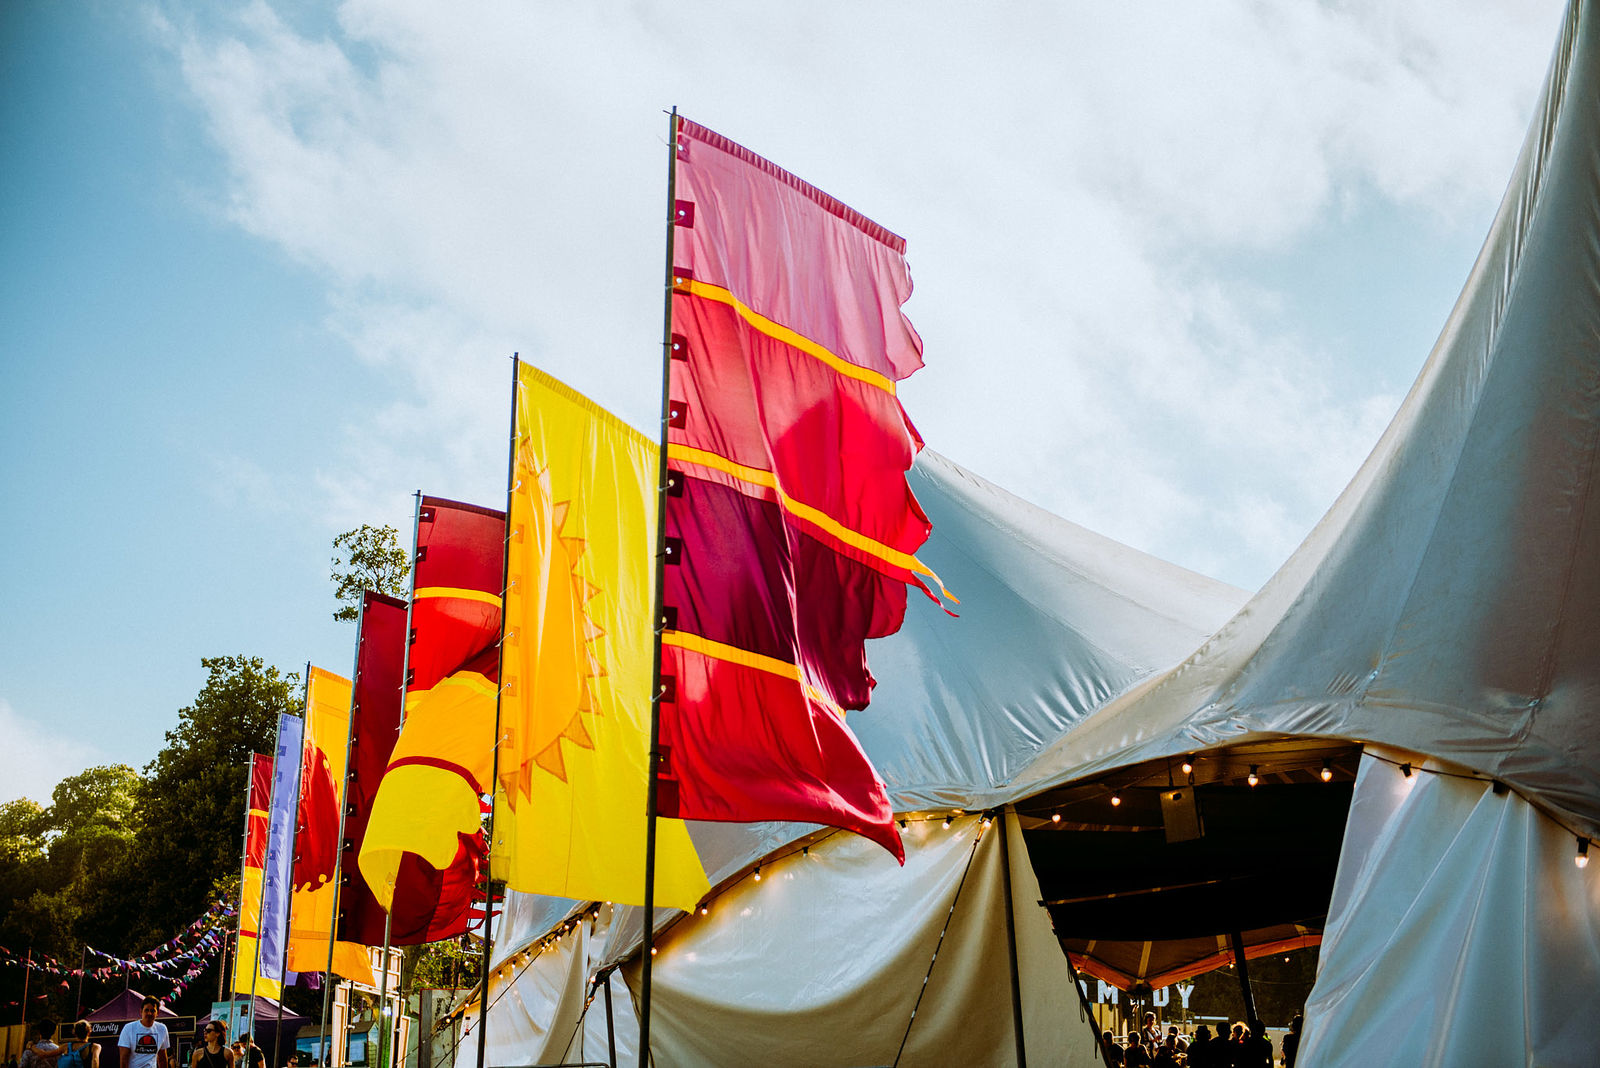 Latitude Festival 2018